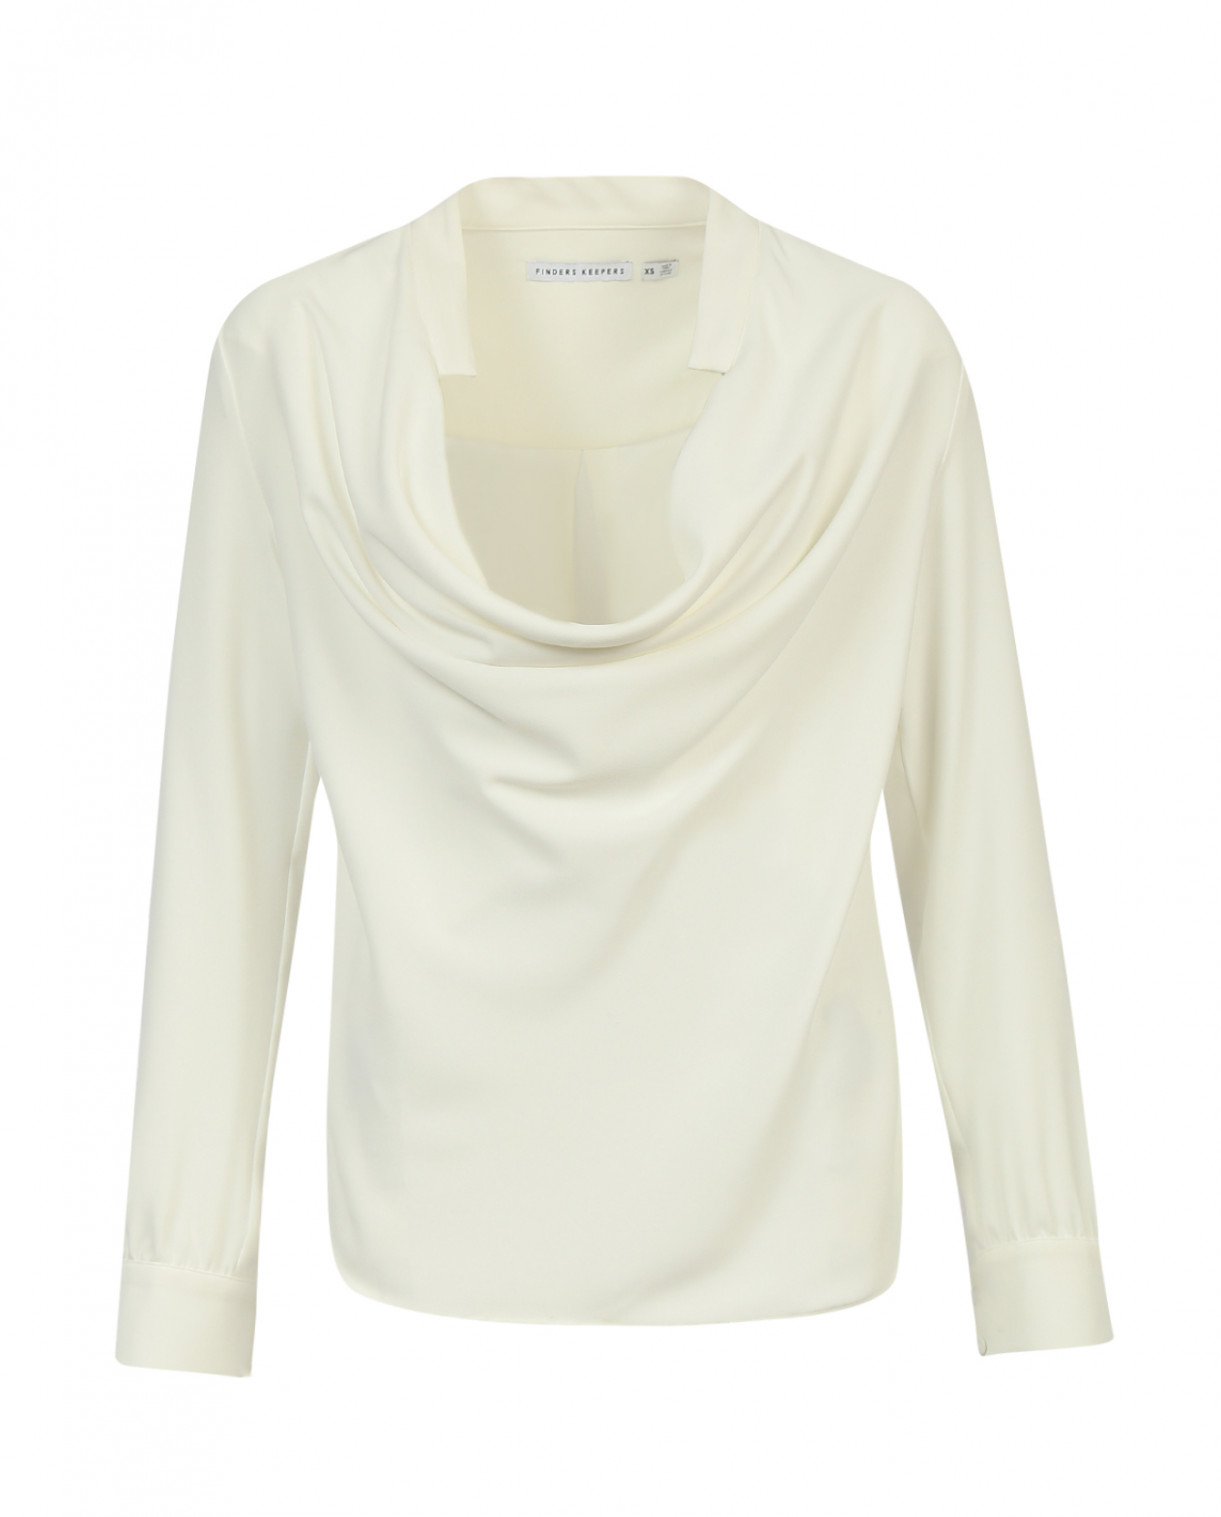 Блуза с глубоким декольте Finders Keepers  –  Общий вид  – Цвет:  Белый